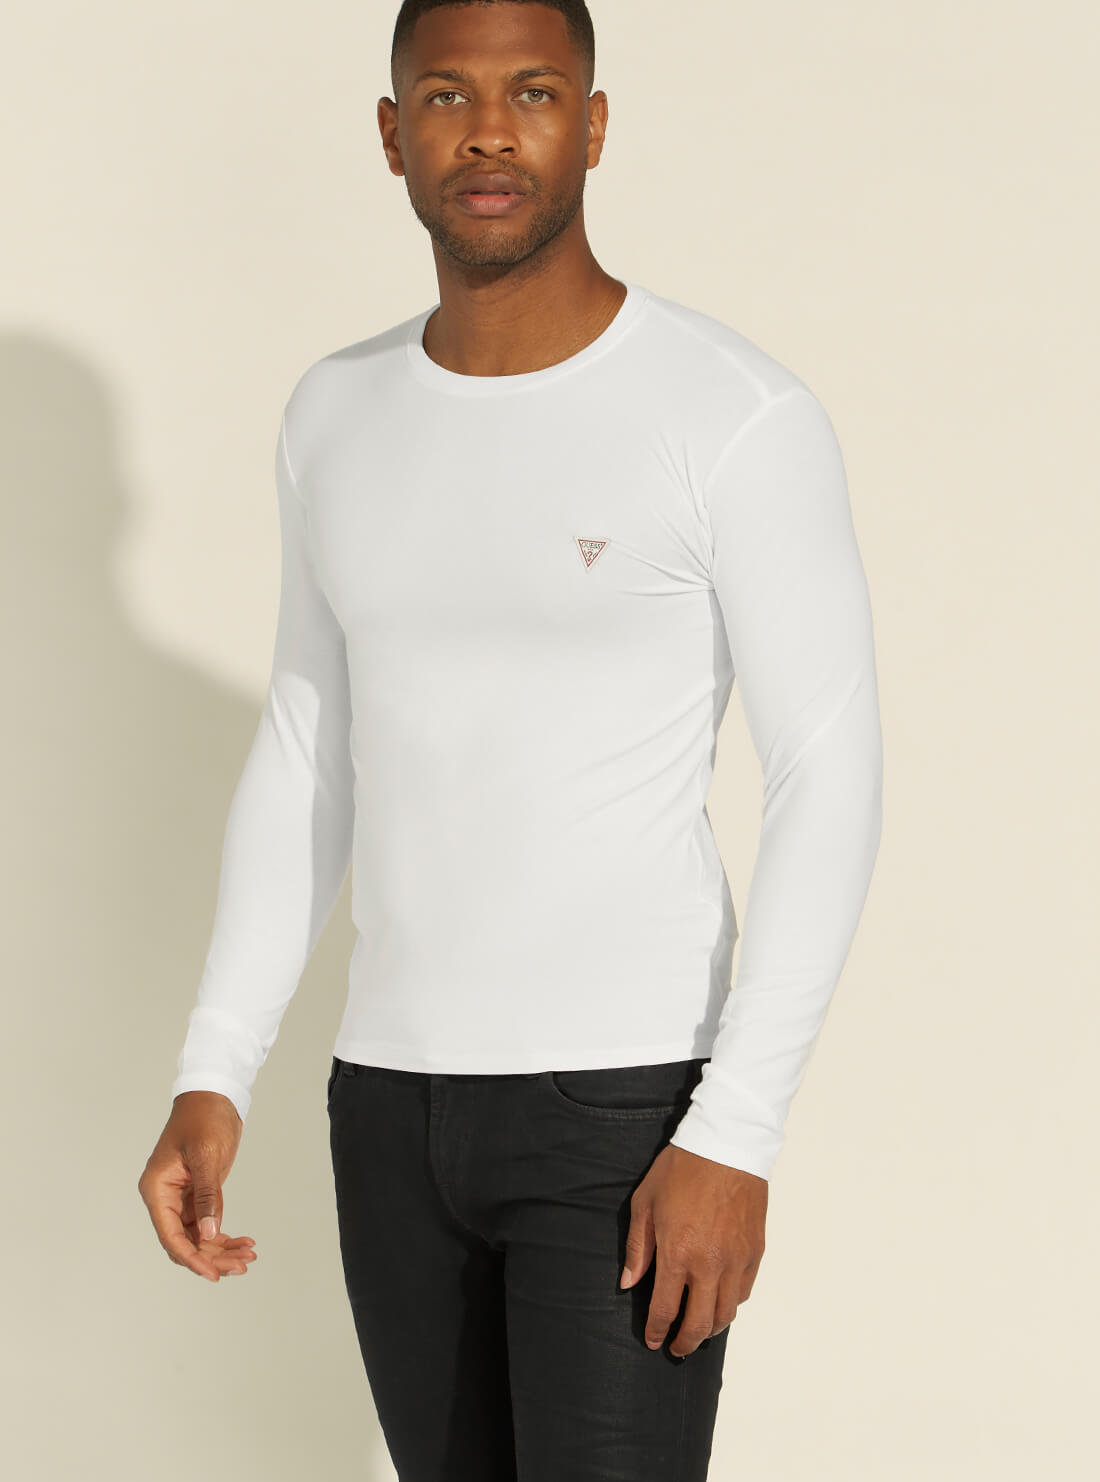 GUESS Mens White Super Slim Long Sleeve T-Shirt M1RI28J1311 Front View